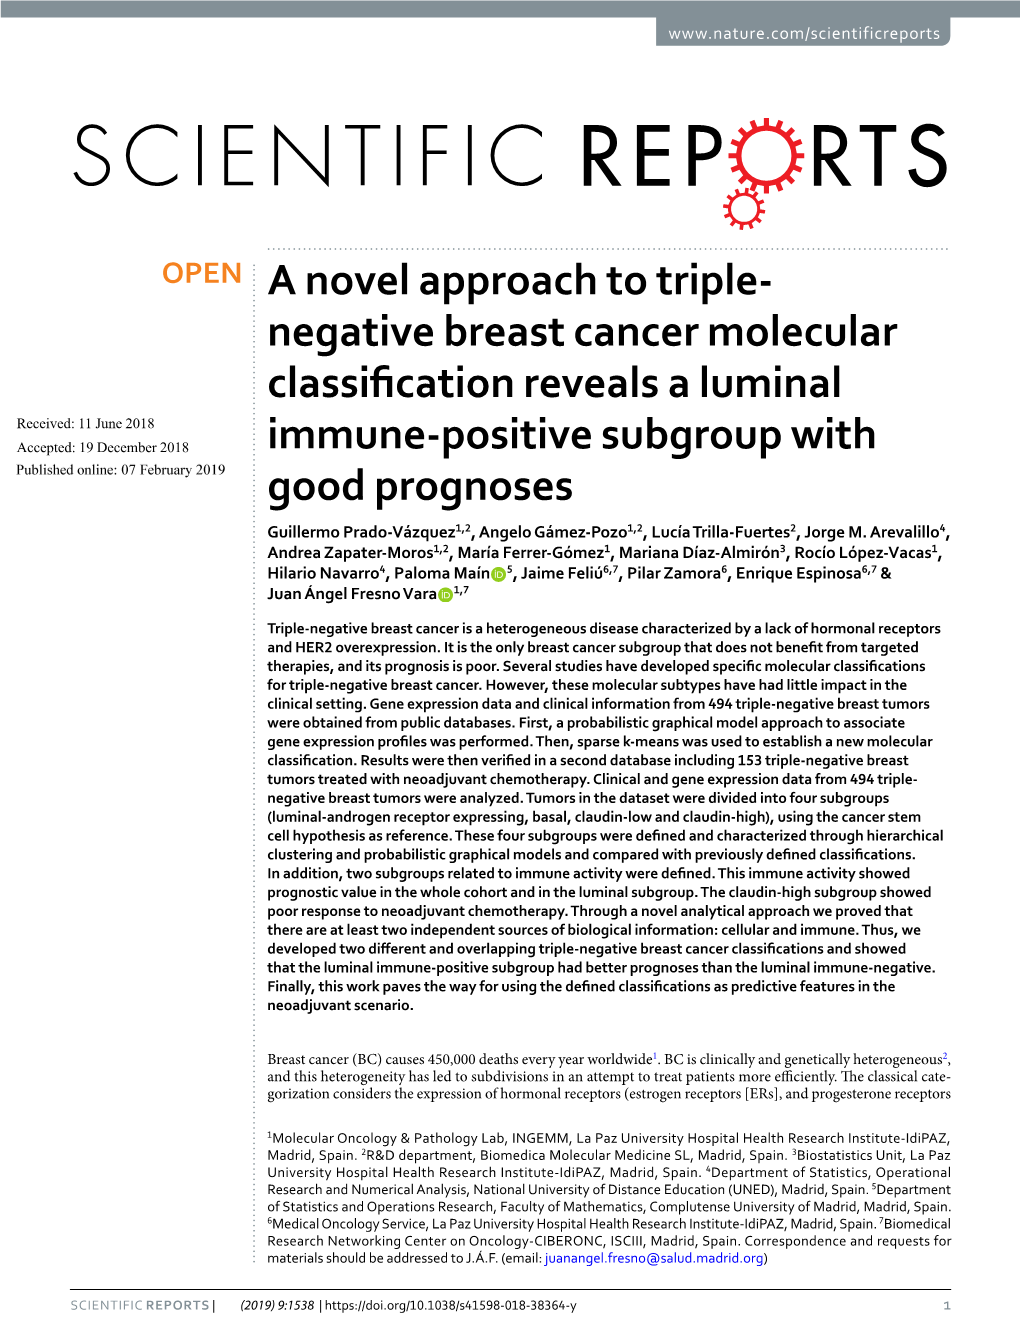 Negative Breast Cancer Molecular Classification Reveals a Luminal